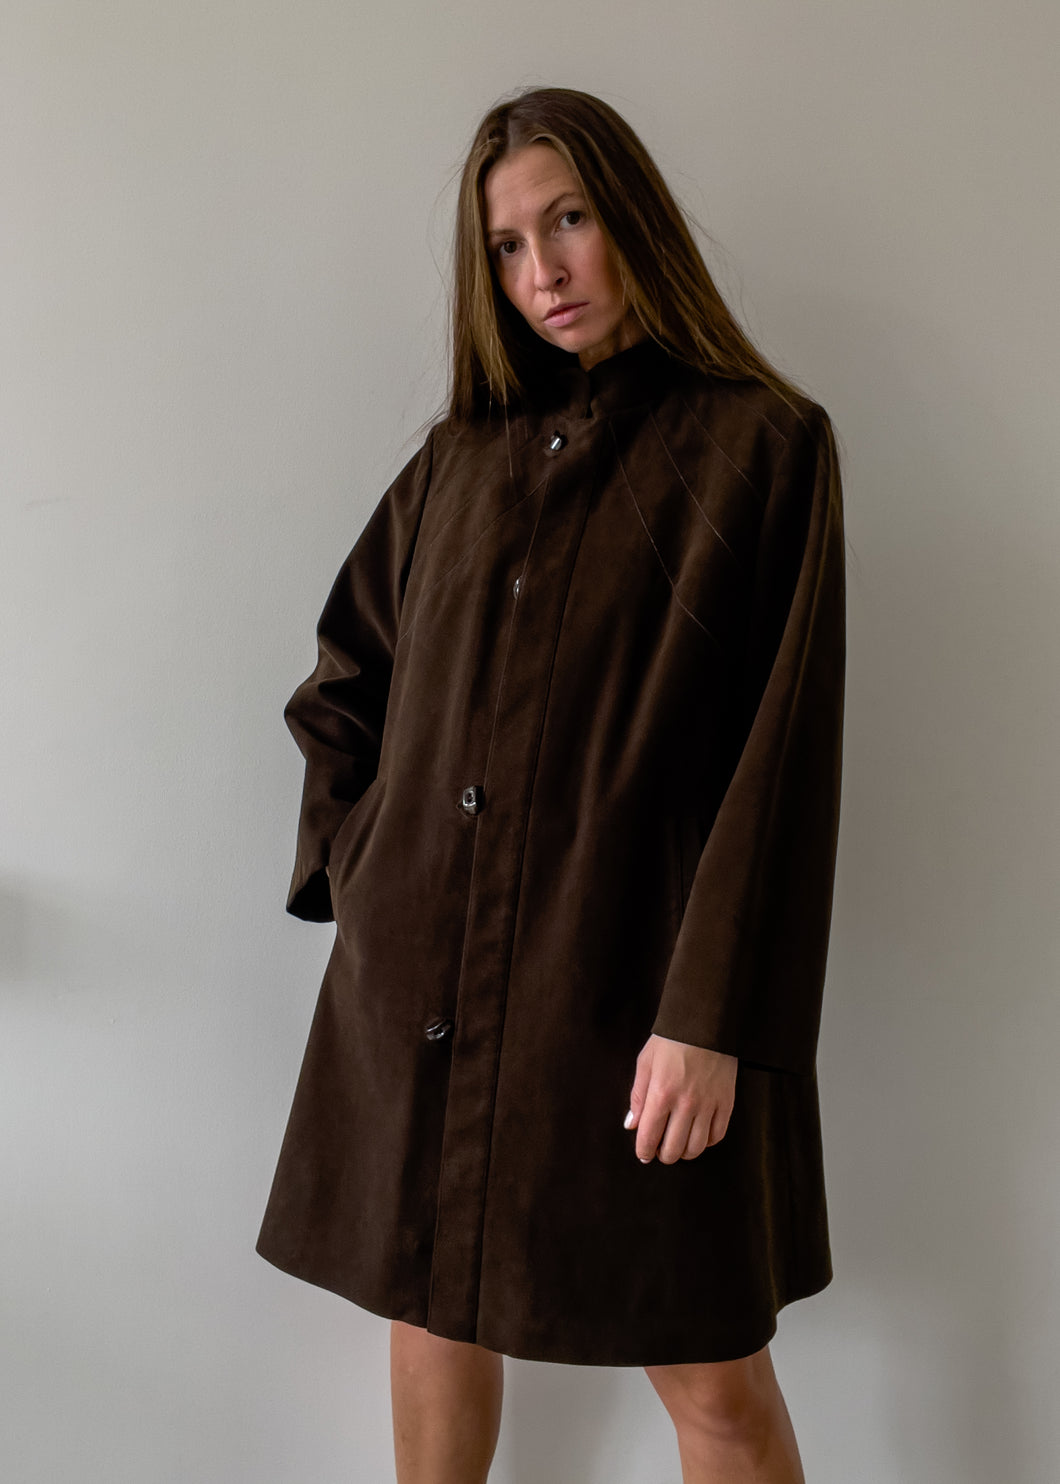 Vintage Brown Oversized Suede Coat